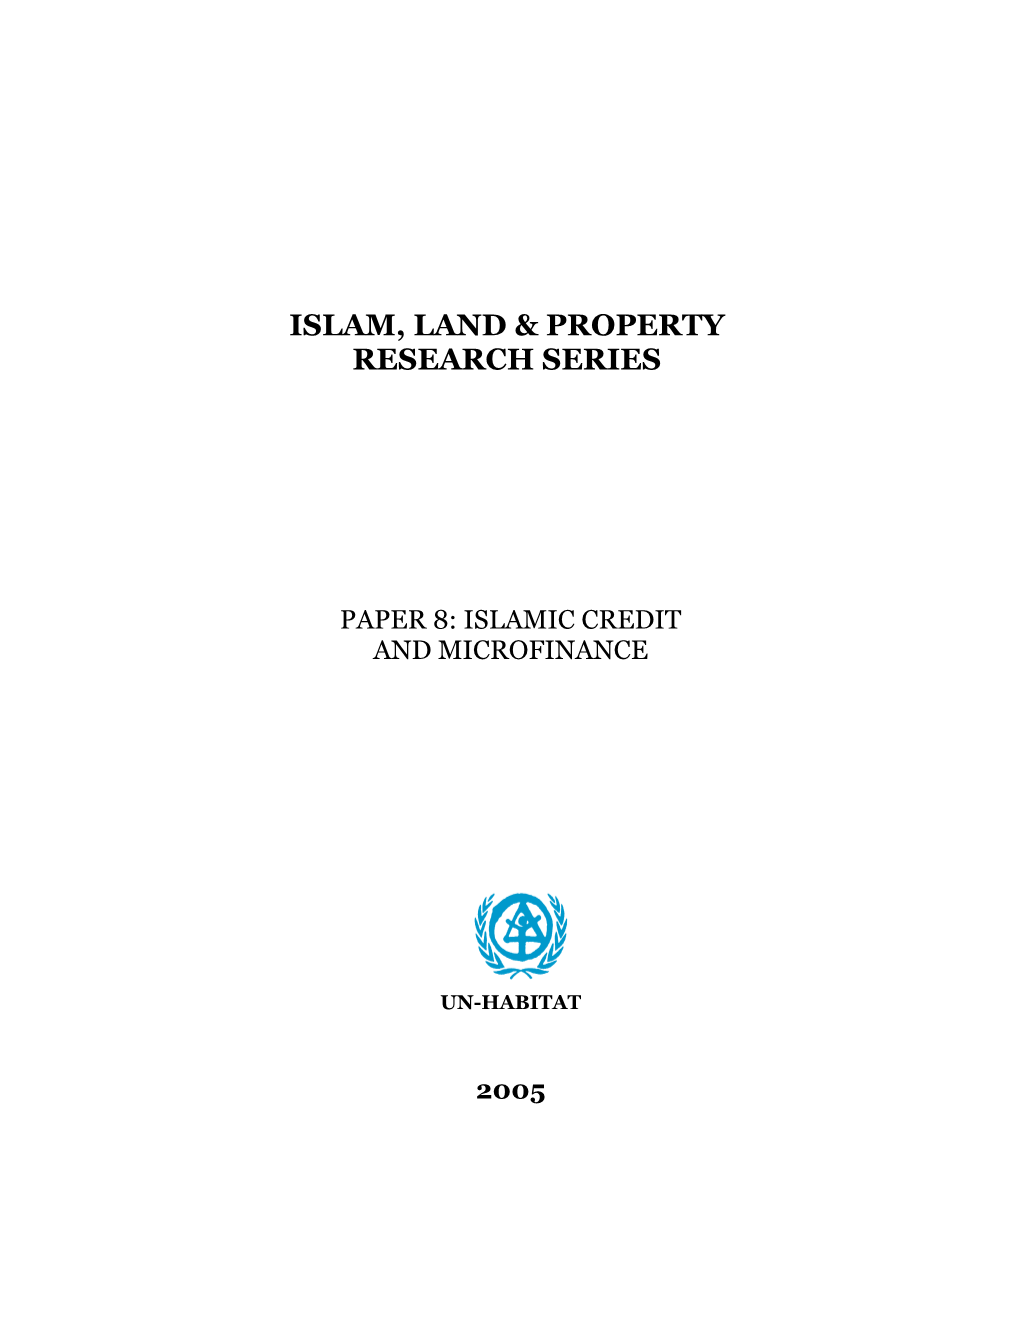 Islam, Land & Property